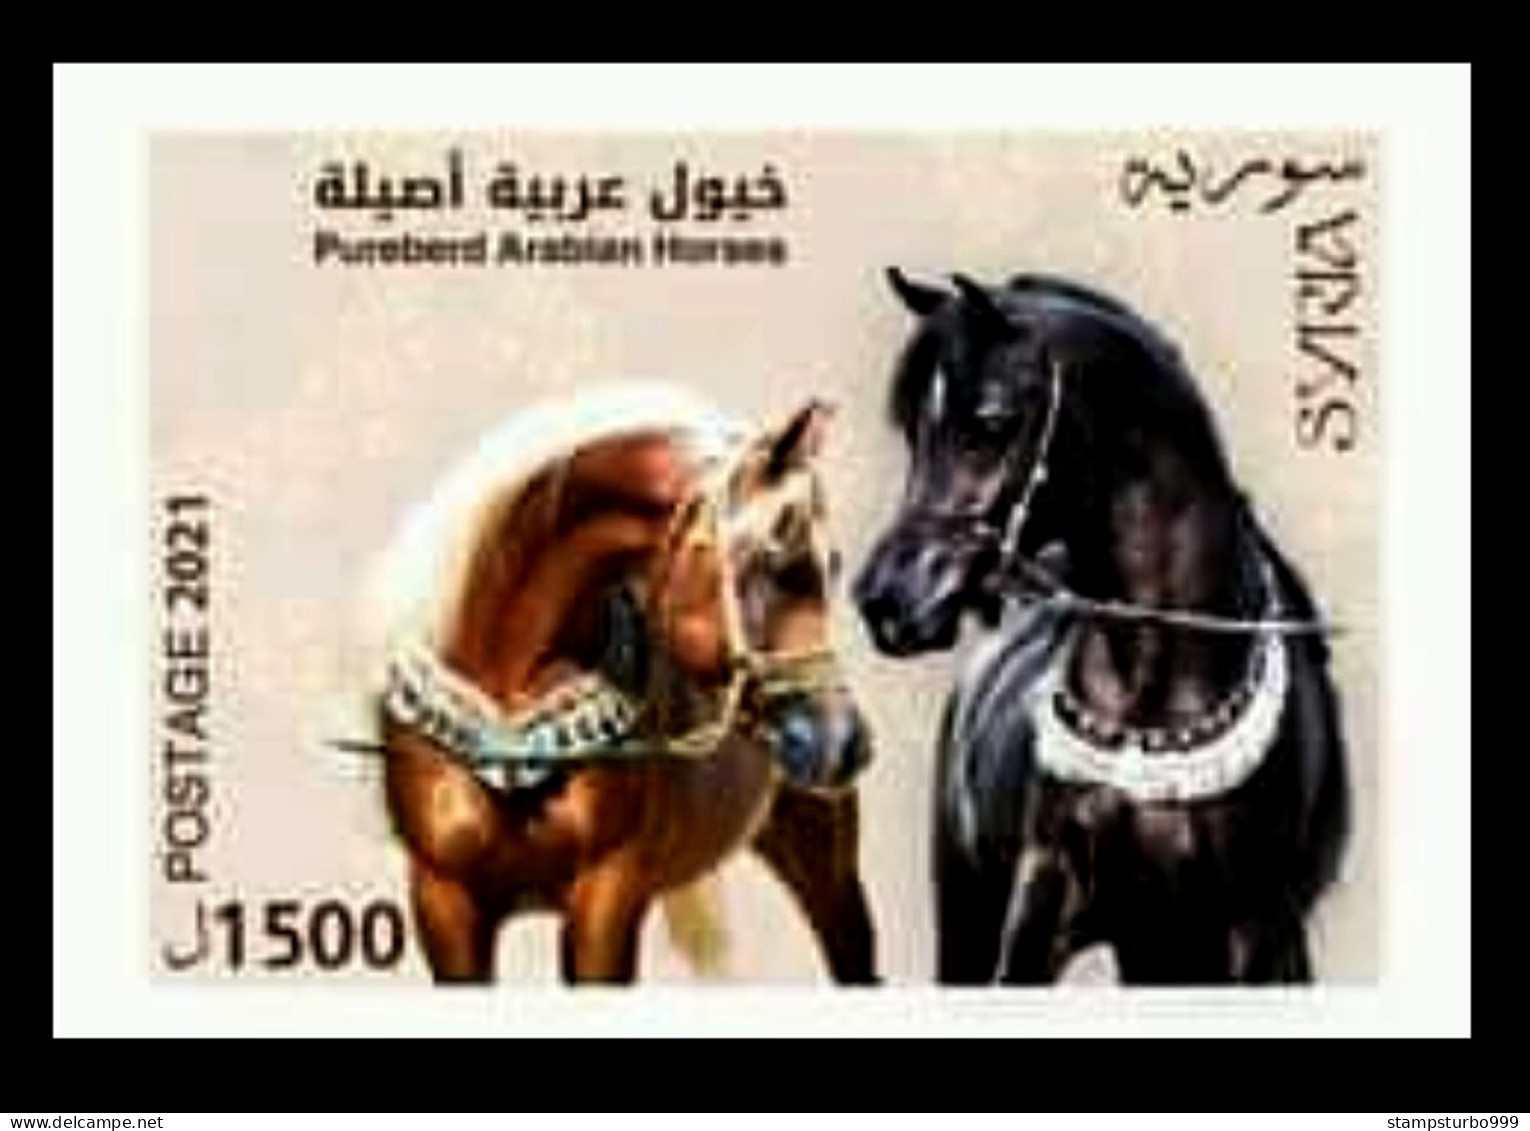 Syrie, Syrien , Syria, 2021 , Arab Horses, Block, Luxe, Sans Charniere ,xx ,MNH ** - Syrien